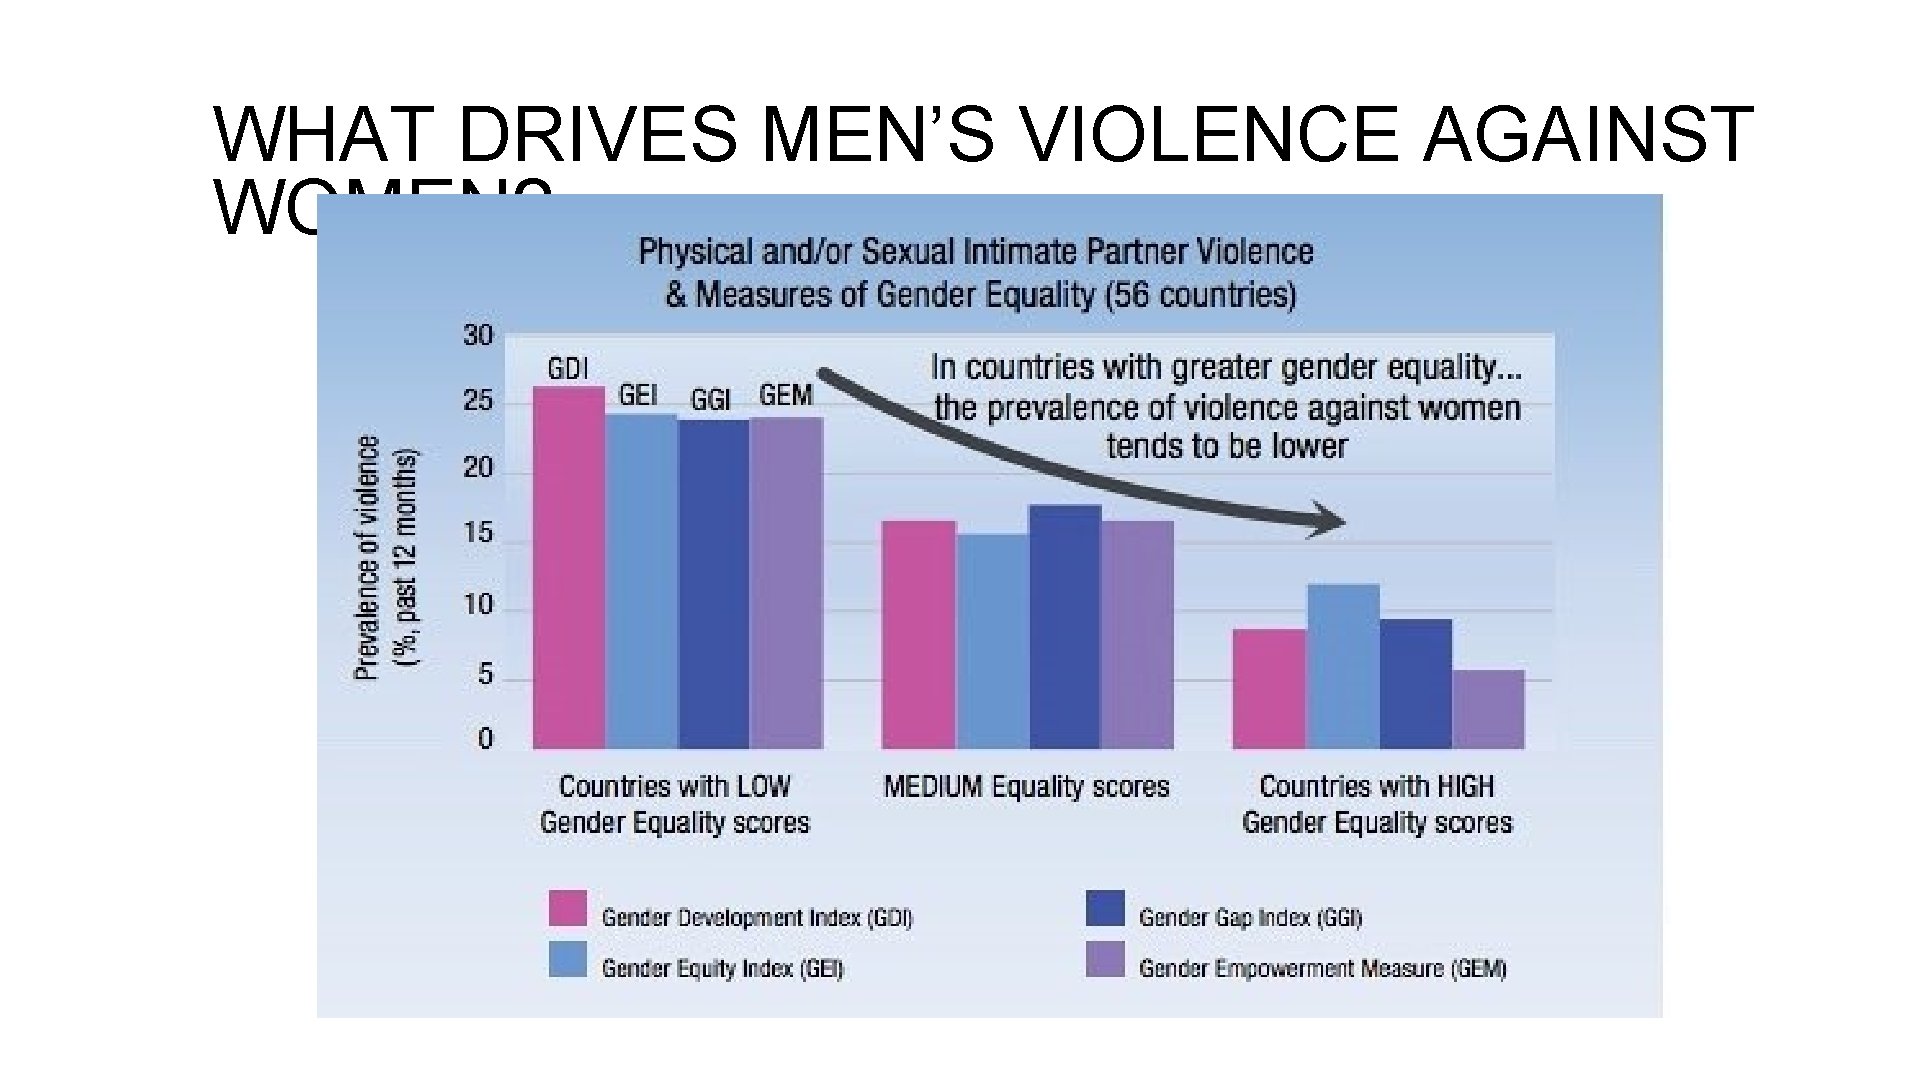 WHAT DRIVES MEN’S VIOLENCE AGAINST WOMEN? 